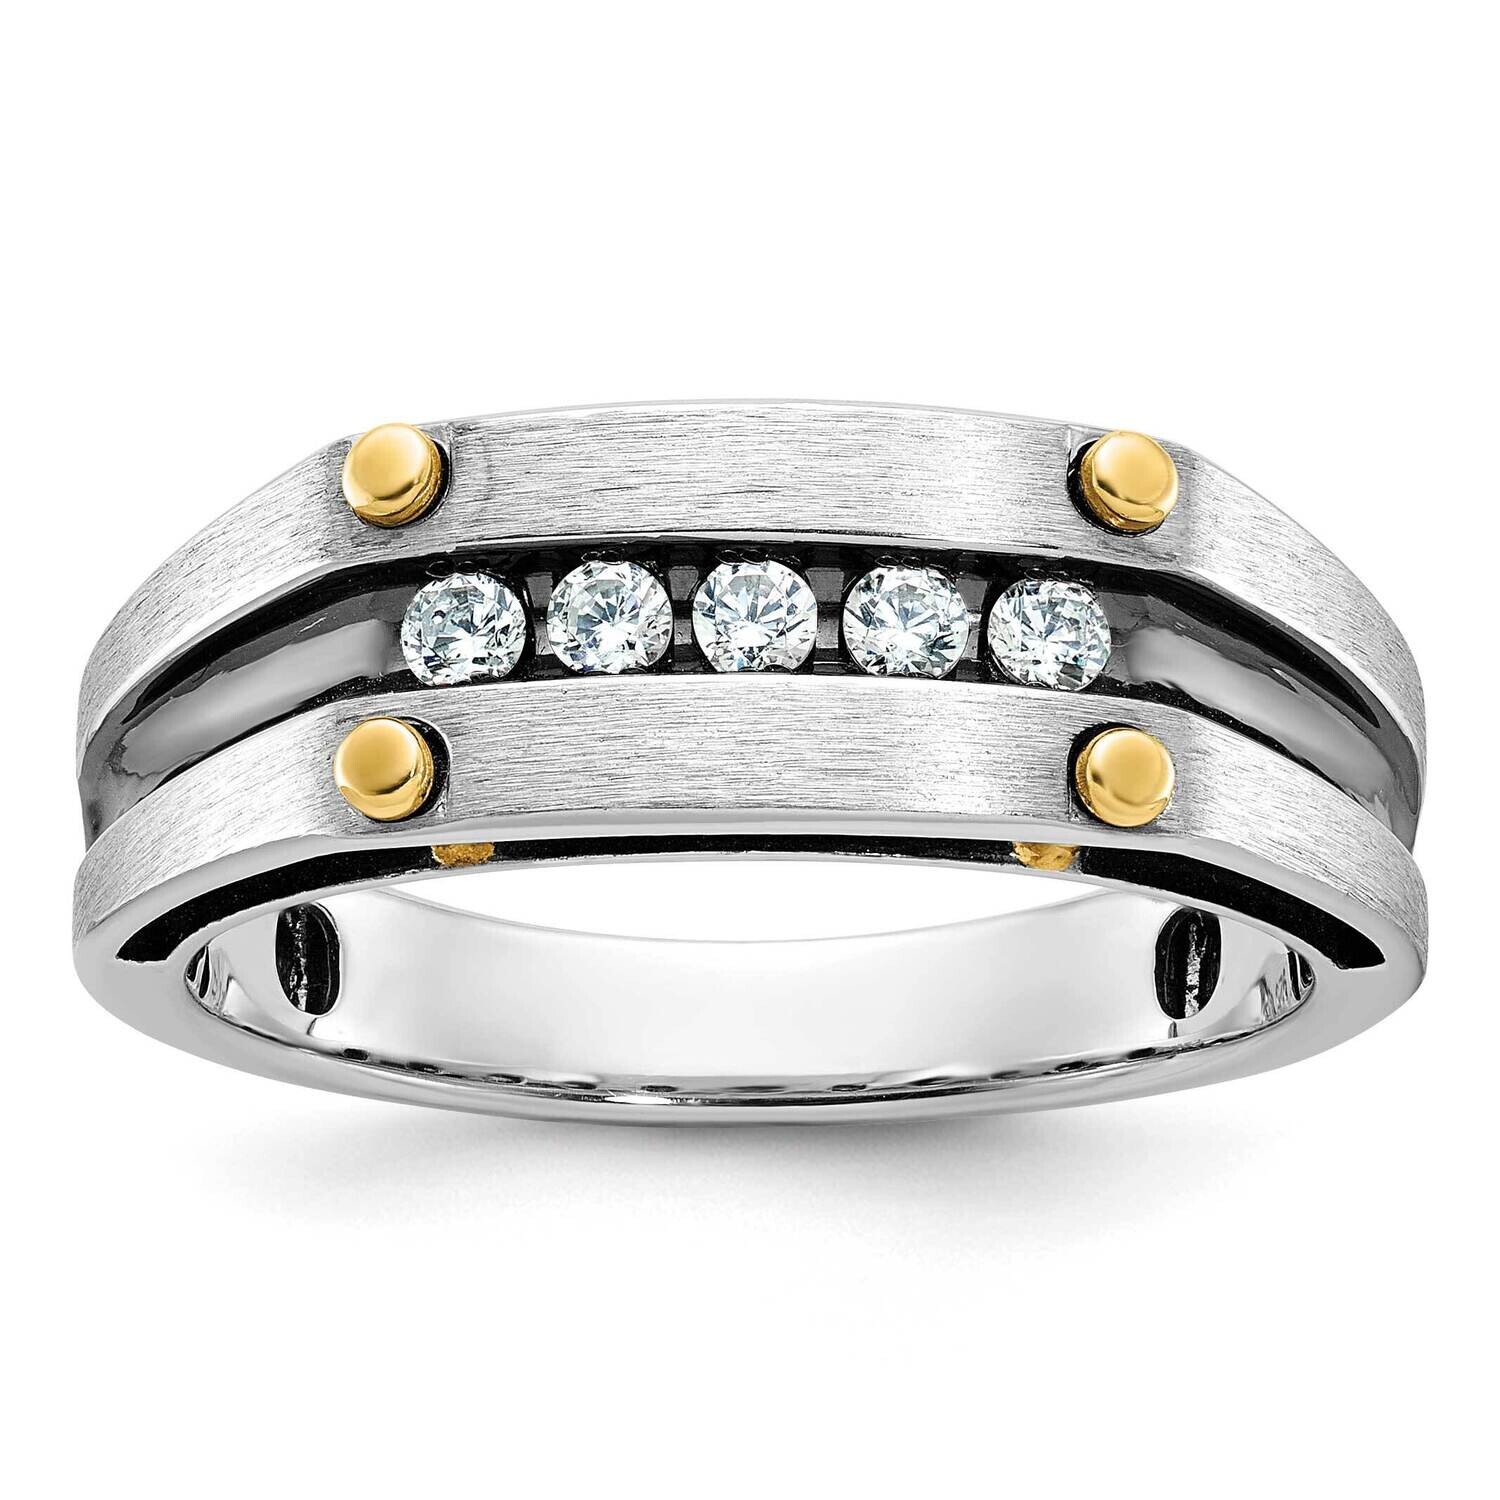 Ibgoodman Men's Polished Satin Diamond Ring Mounting 14k Two-Tone Gold B63778-4WY